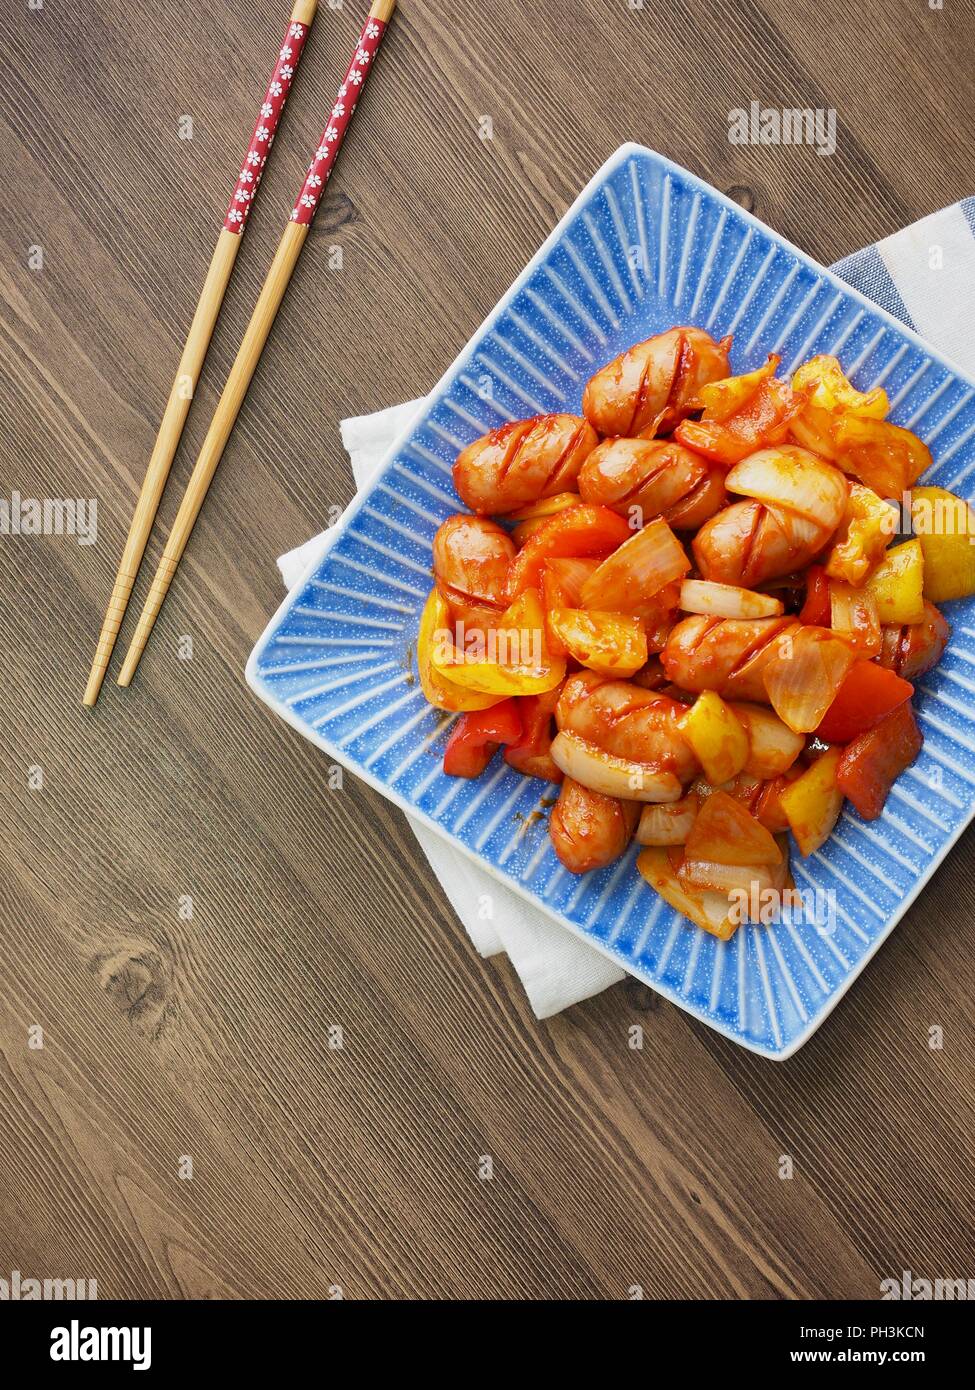 Korean food Sausage vegetables ketchup fried, Sausage stir-fried vegetables Stock Photo